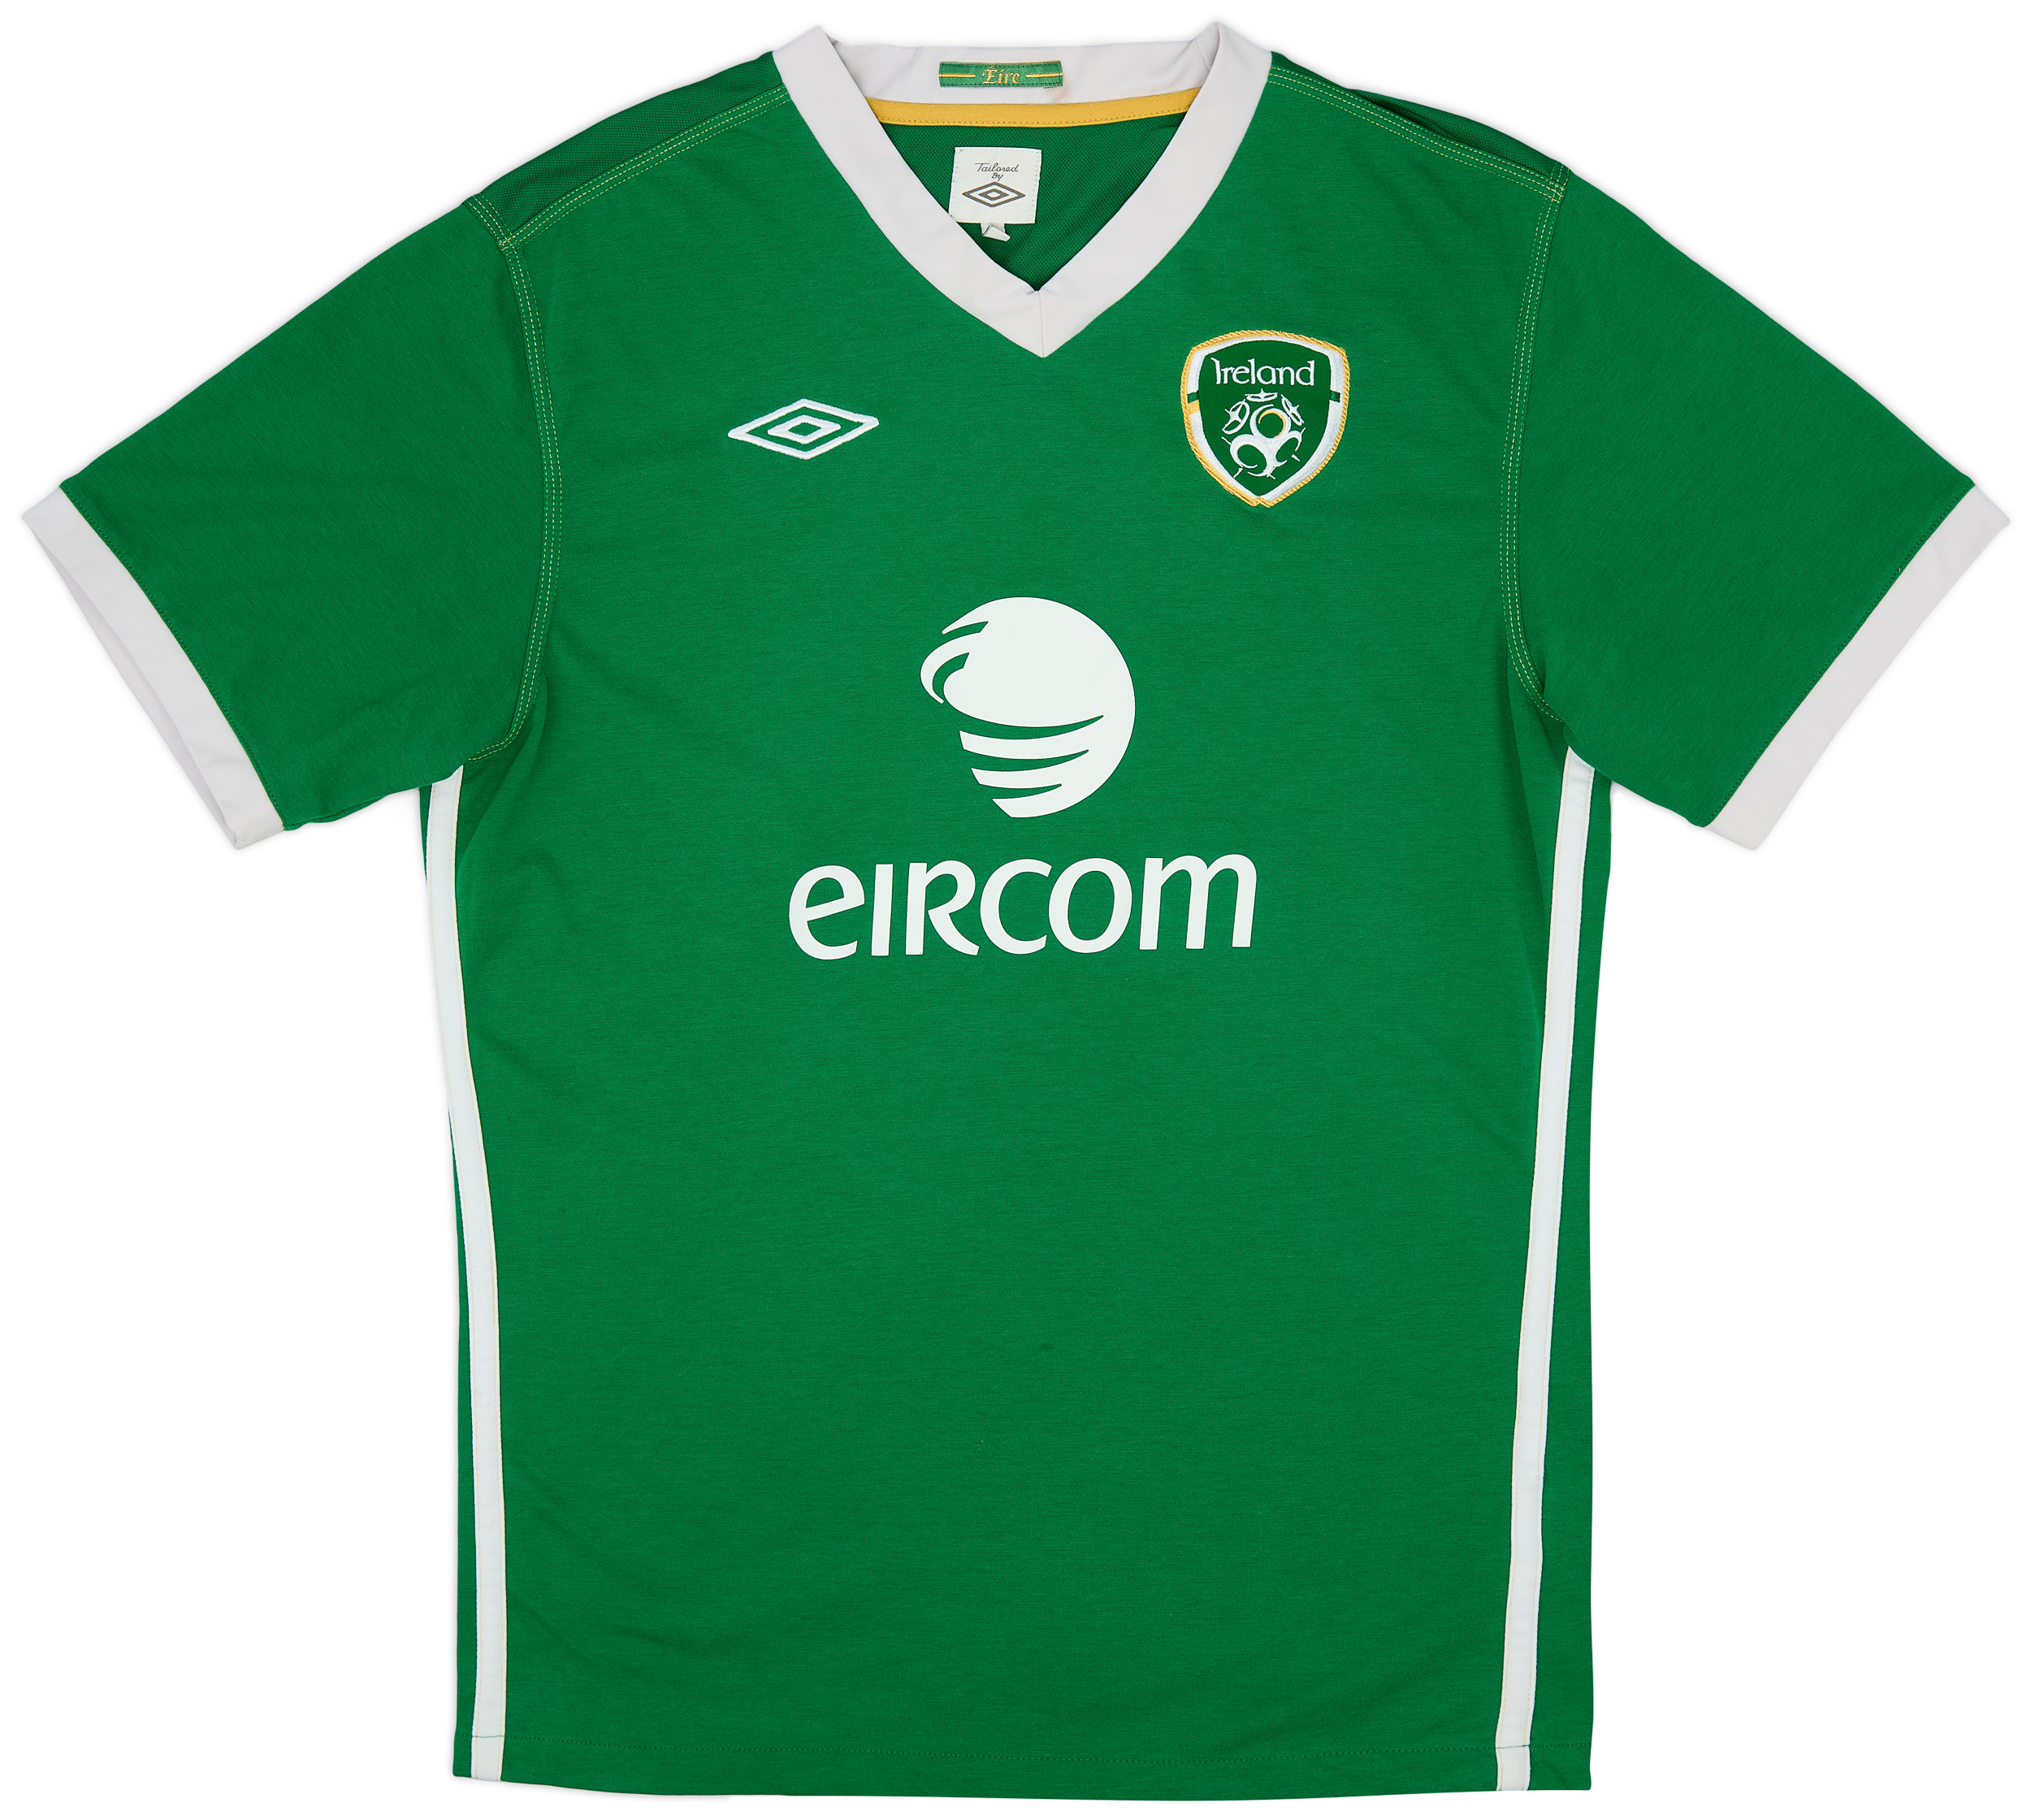 2010-11 Republic of Ireland Home Shirt - 5/10 - ()